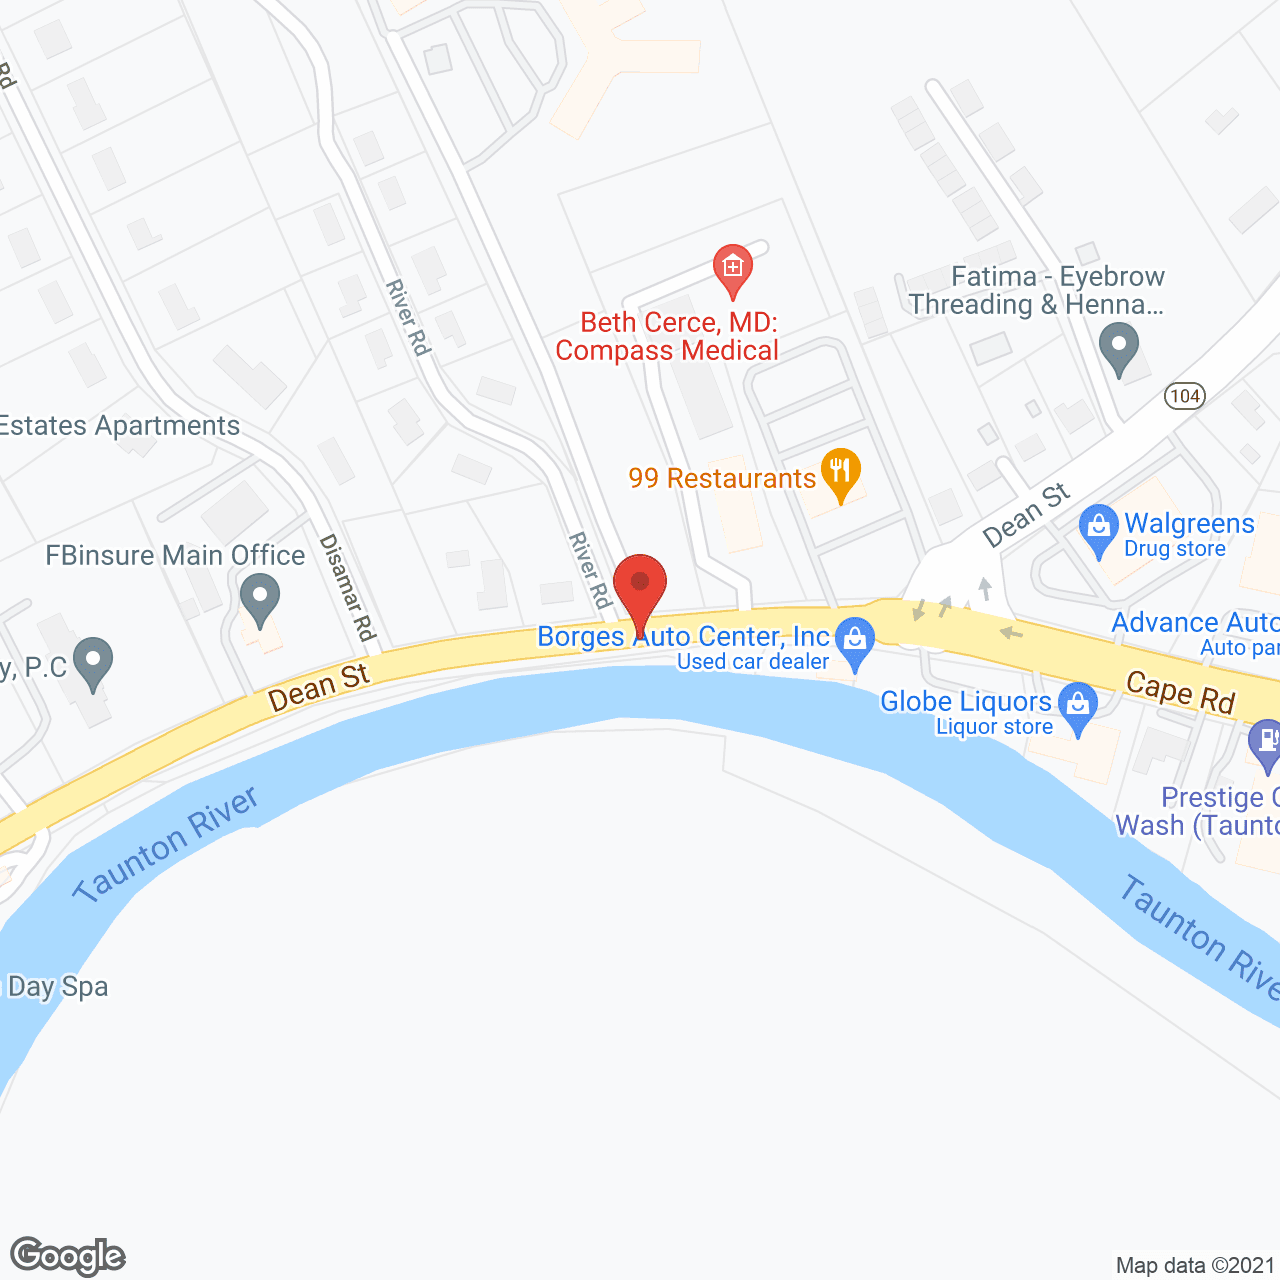 Wedgemere Heathcare in google map